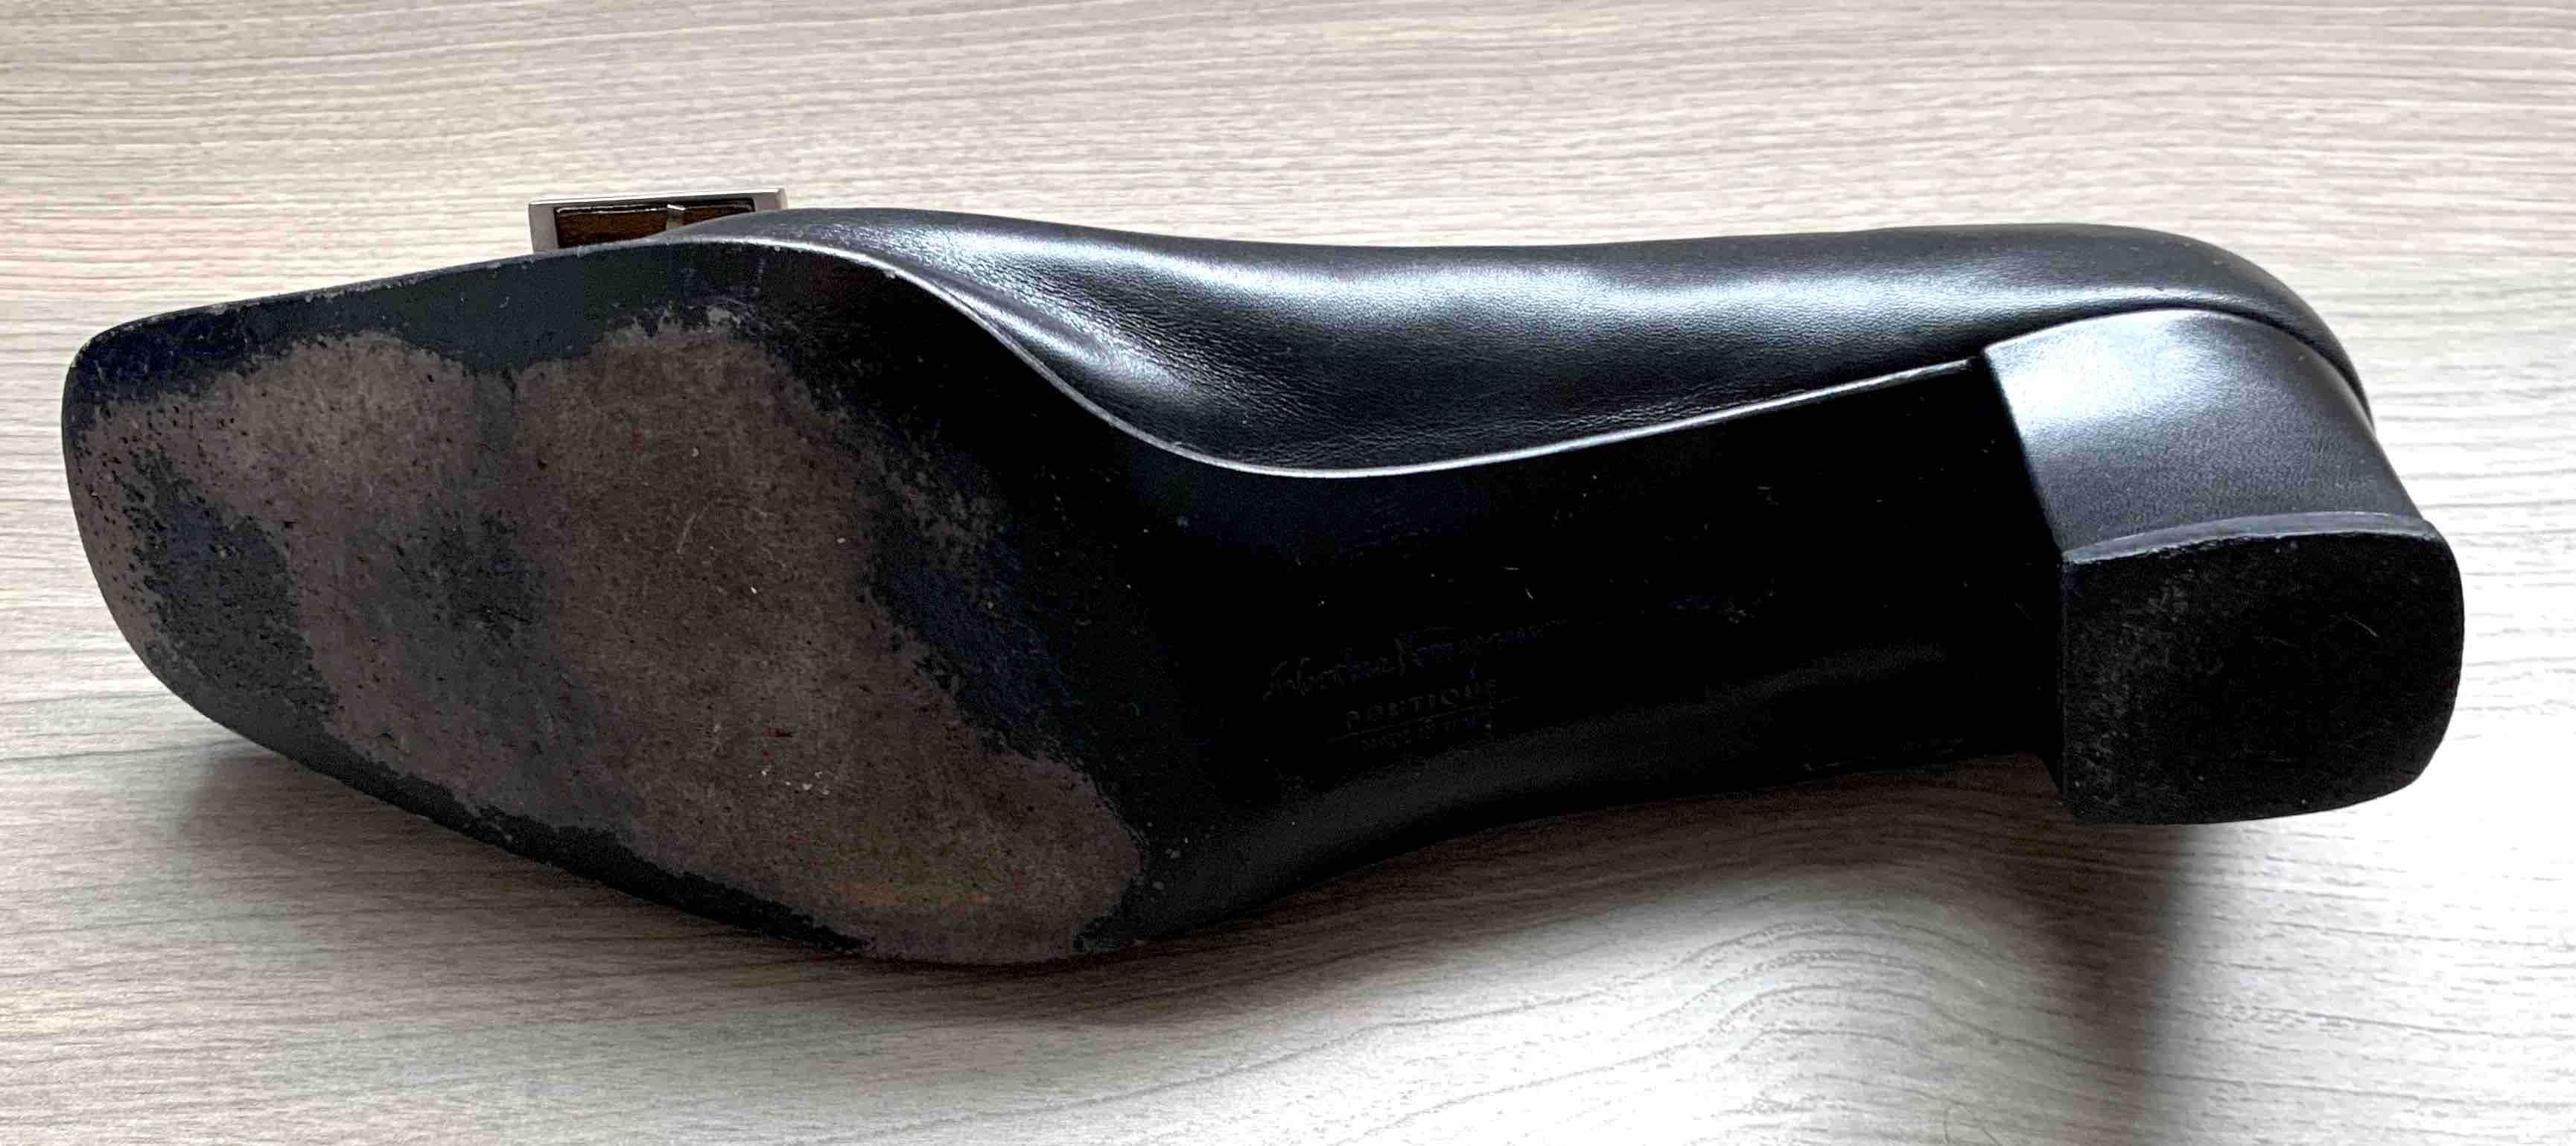 SALVATORE FERRAGAMO Superbi Pantofi Vintage Fashion Piele Negru UK